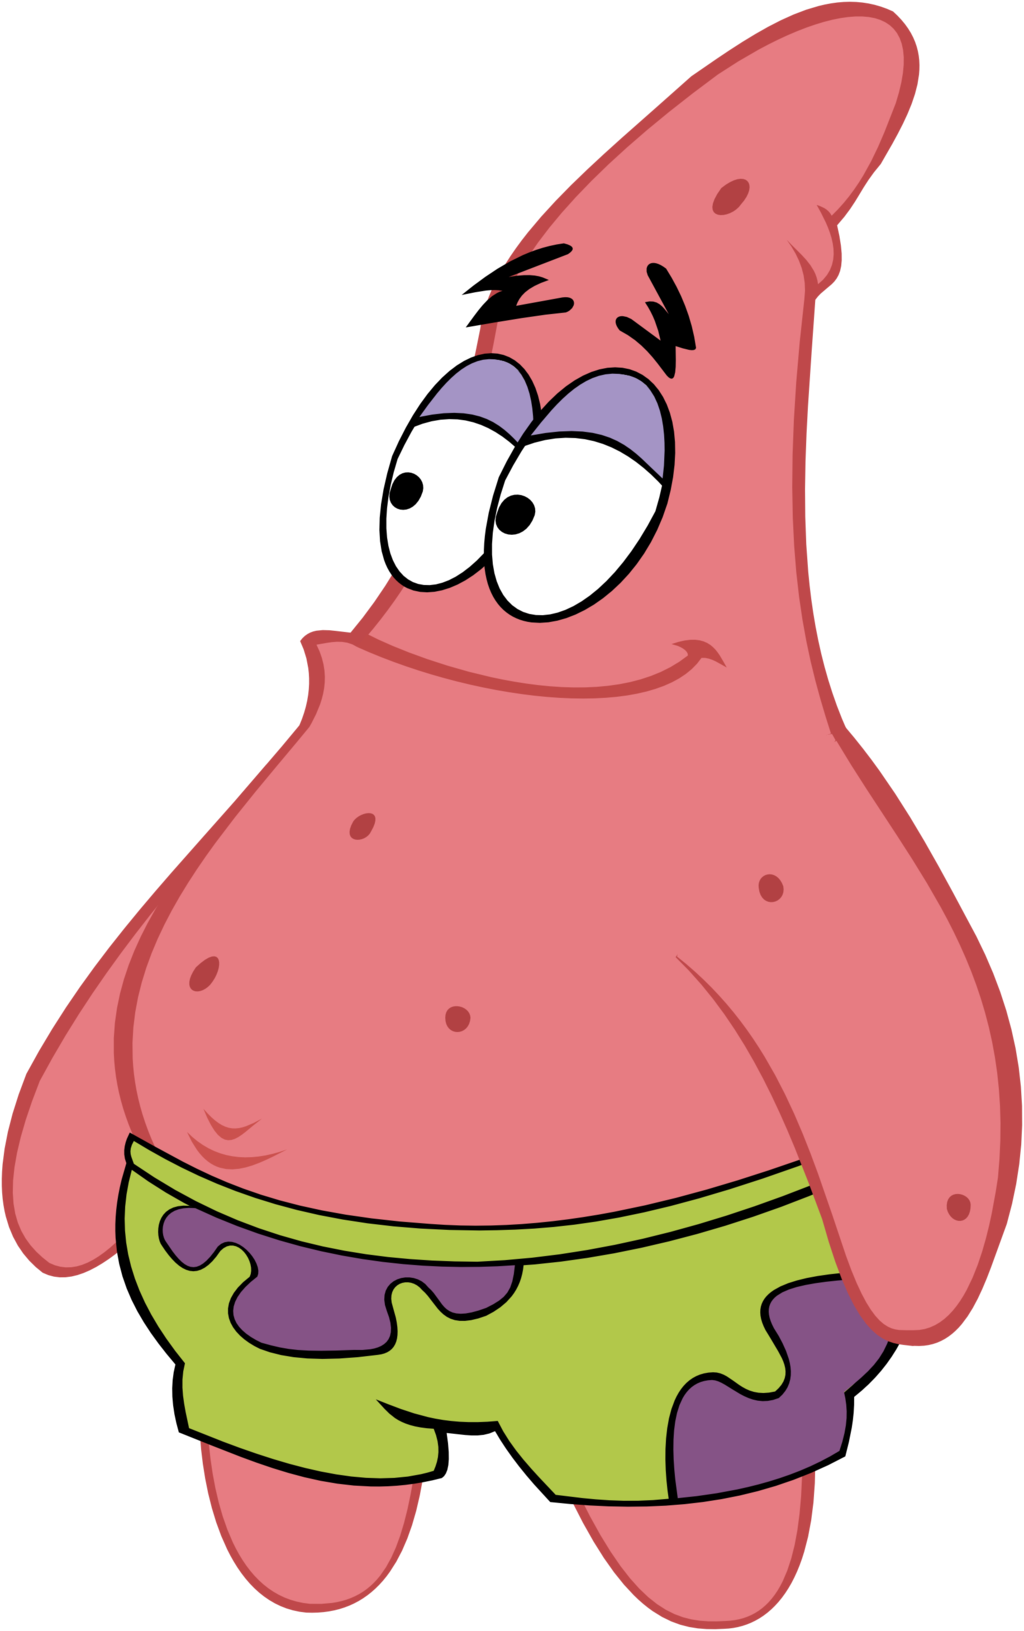 Patrick Star Season 1 (1024x1631)